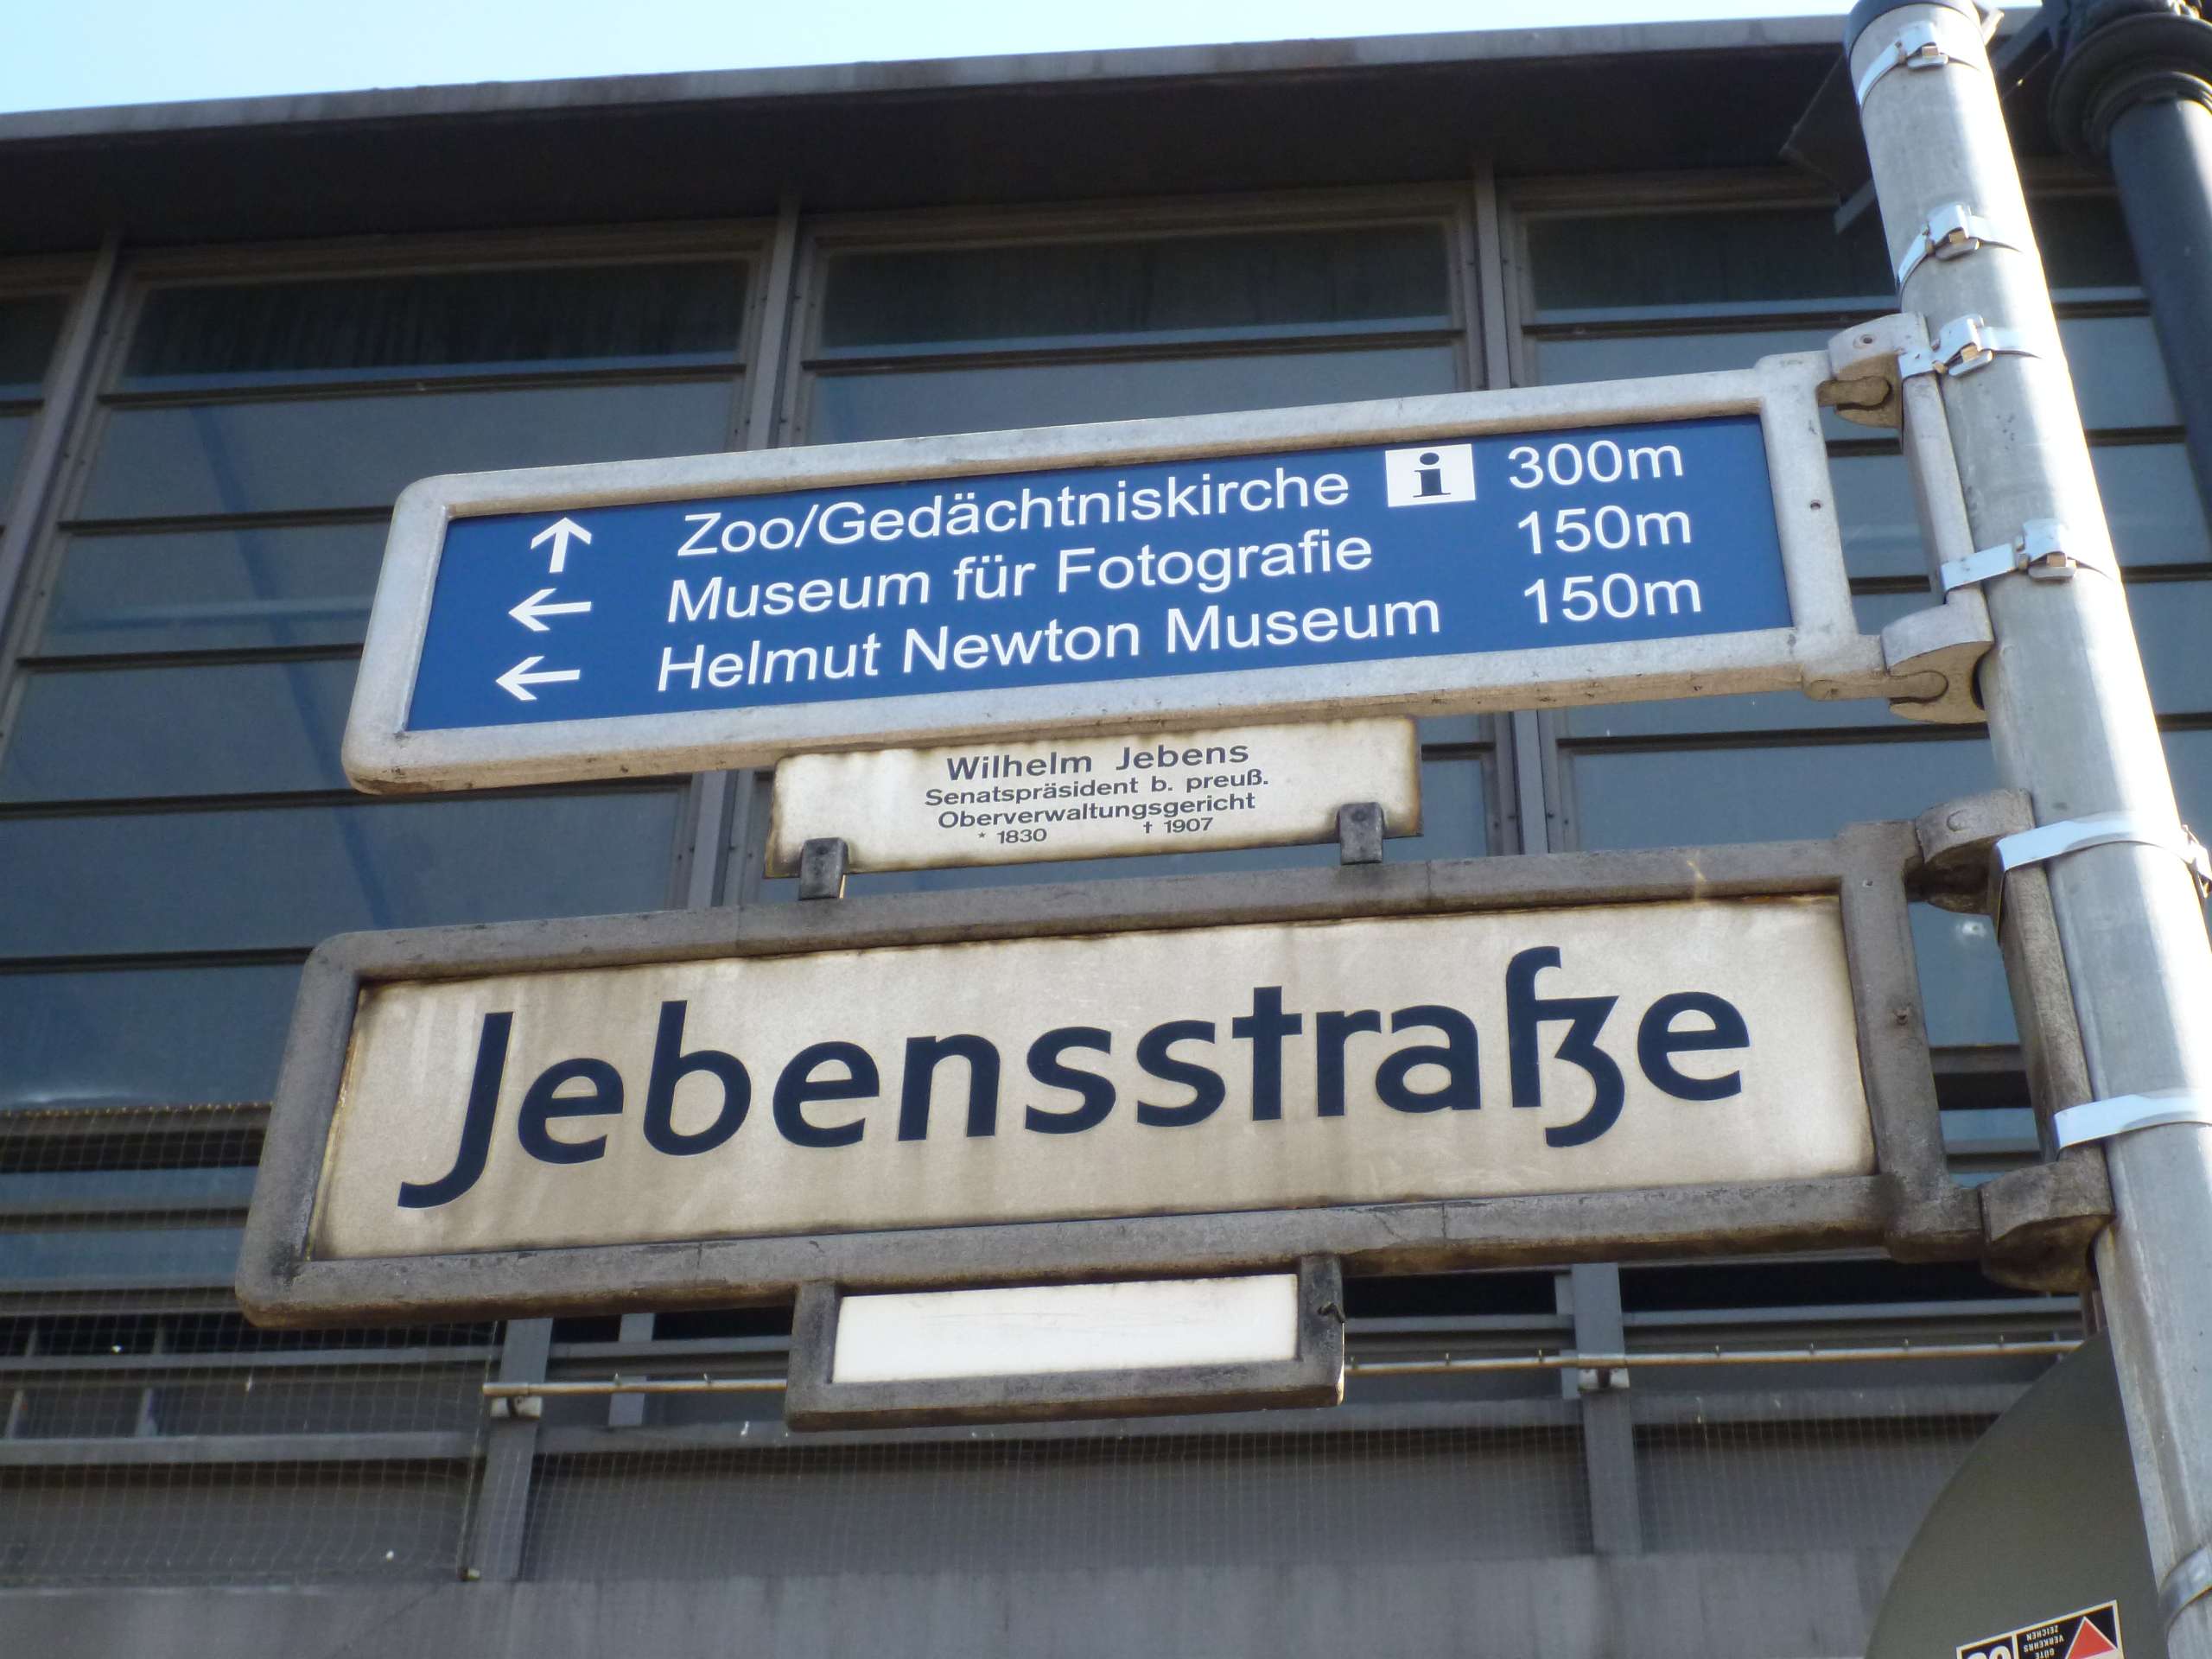 Jebensstrasse